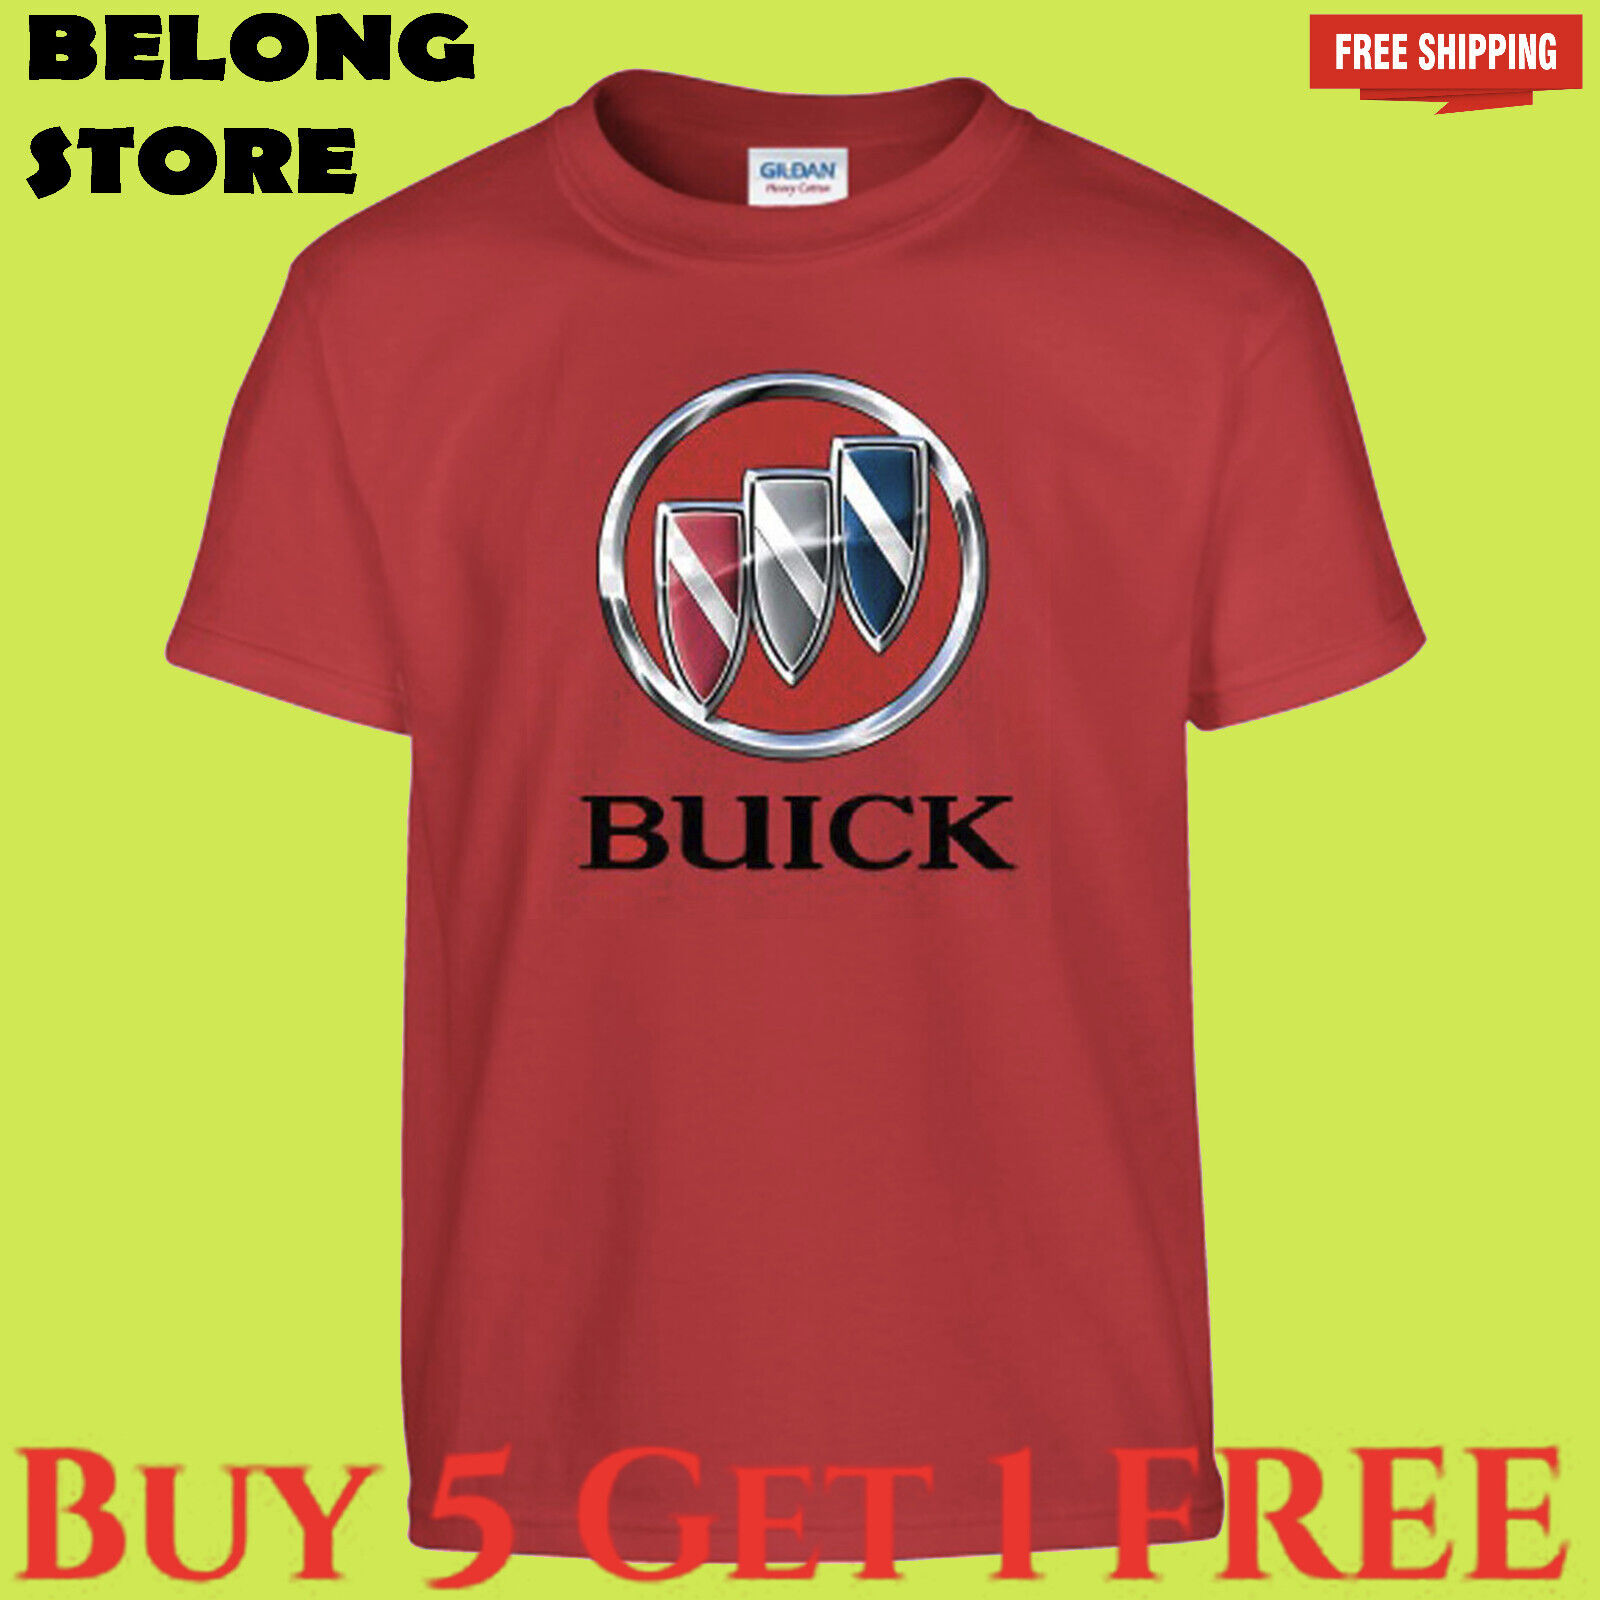 Buick Car Motorcycle Logo Men\'s New T-shirt Size S-5XL Tee USA